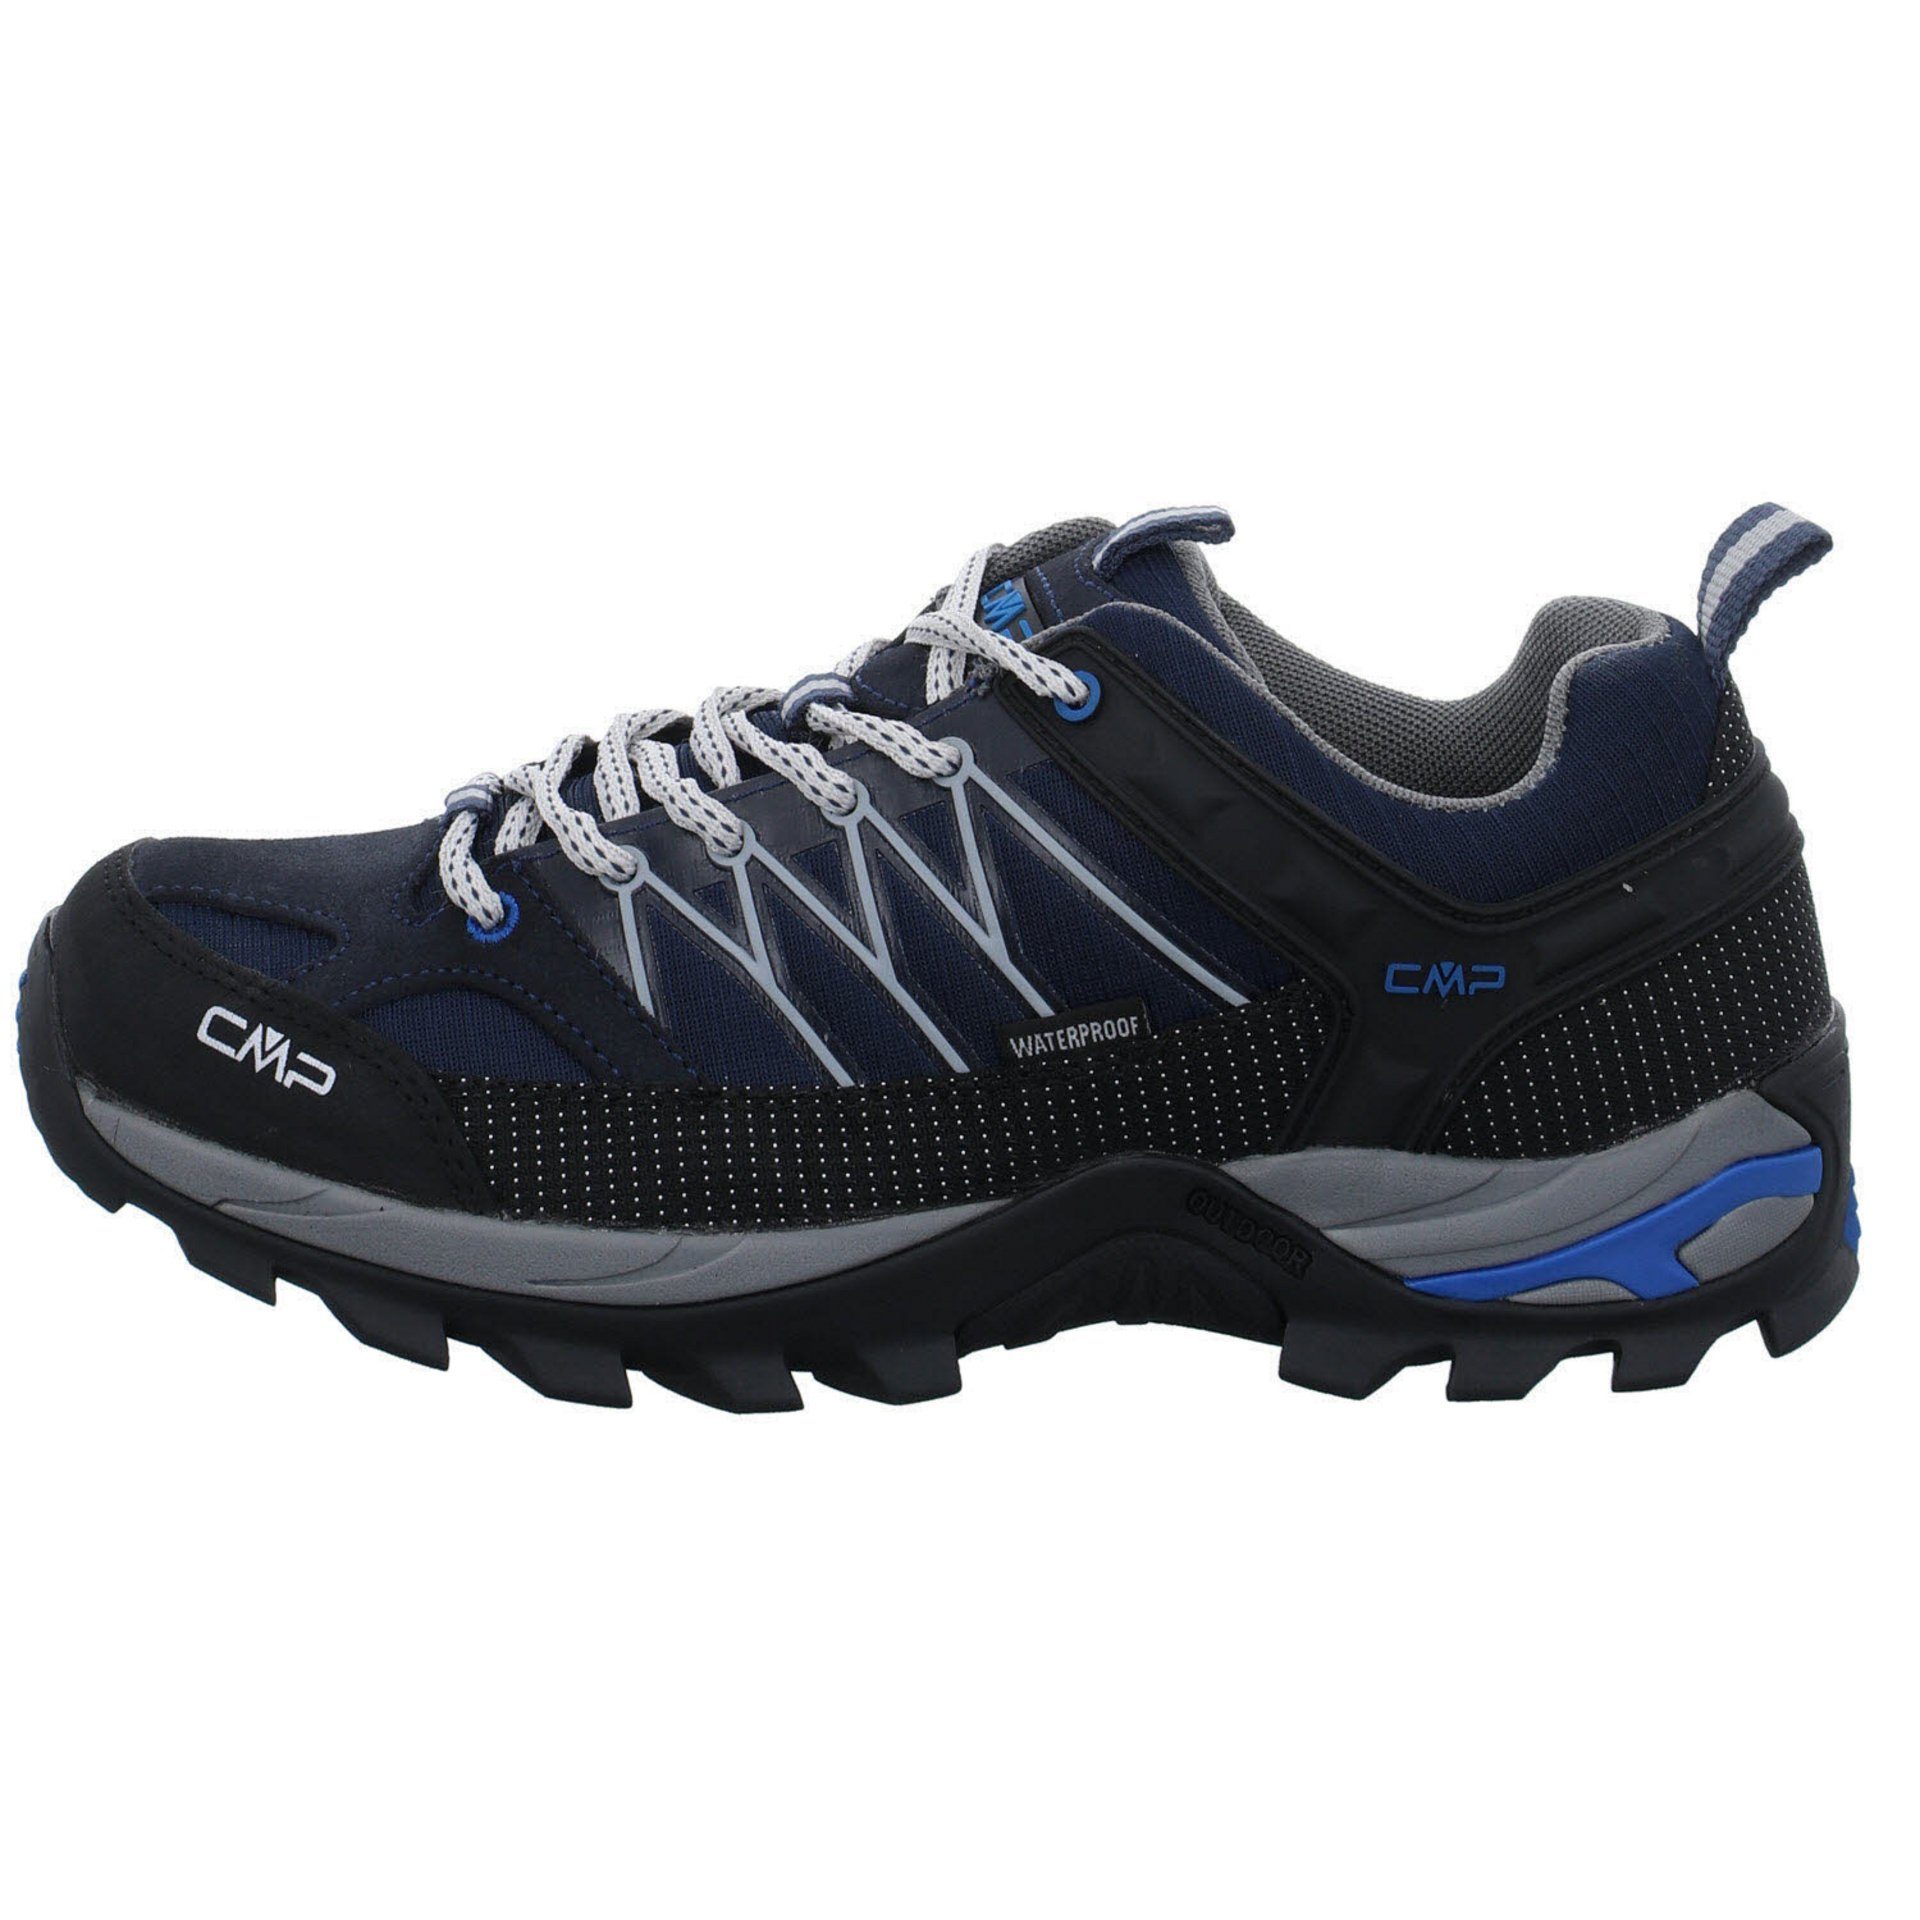 Herren dunkelblau (295) Schuhe Outdoorschuh CMP Rigel Outdoorschuh Outdoor Leder-/Textilkombination Low